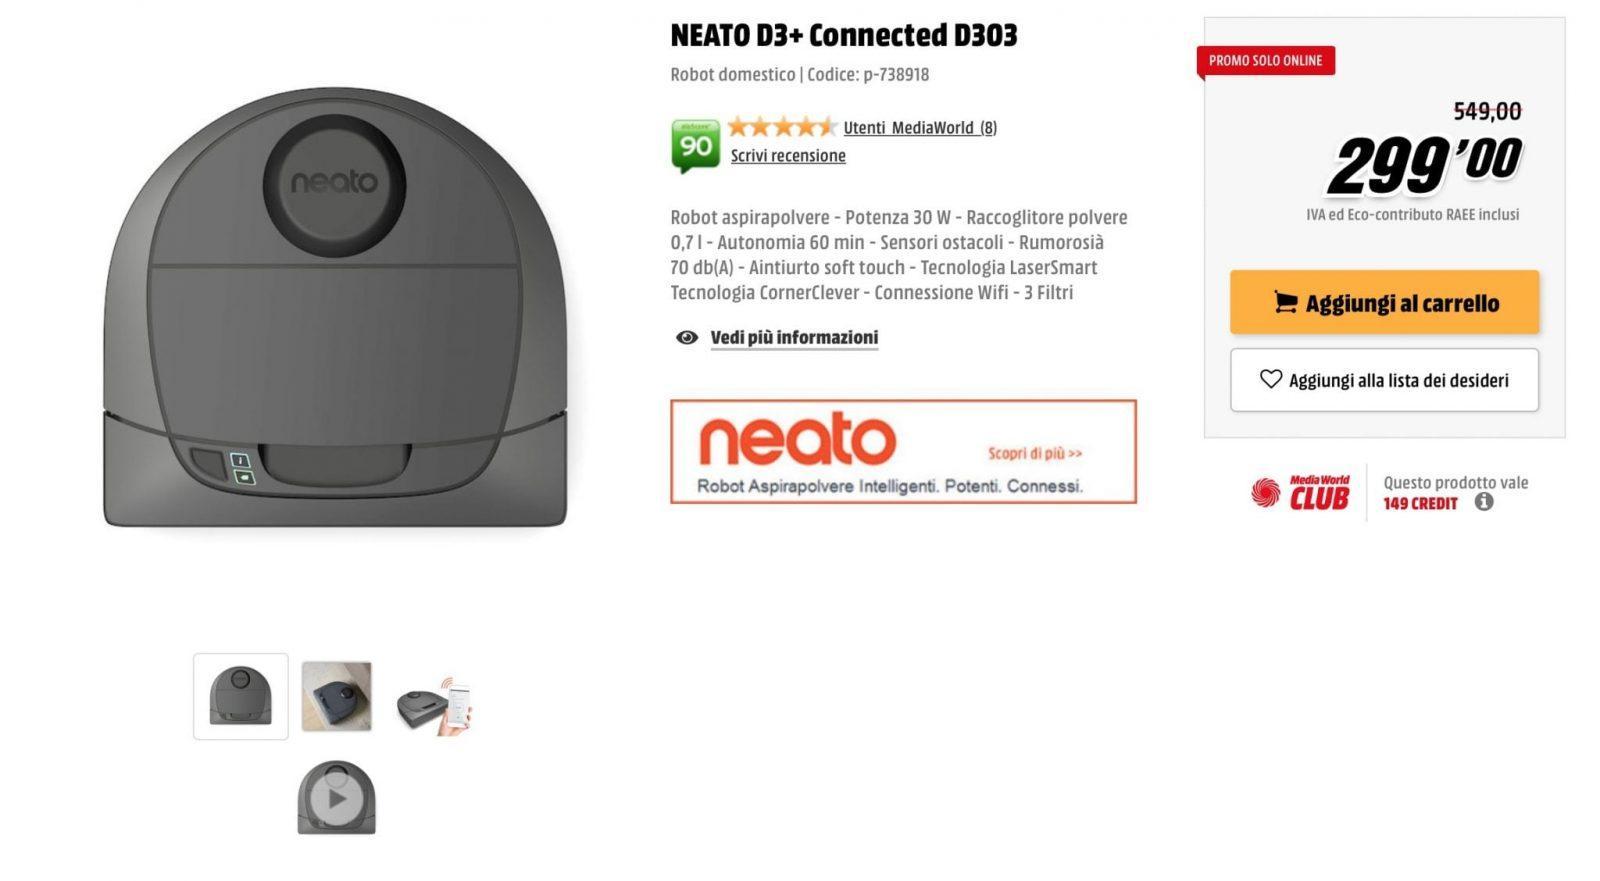 Neato D3+ Connected D303 robot aspirapolvere MediaWorld